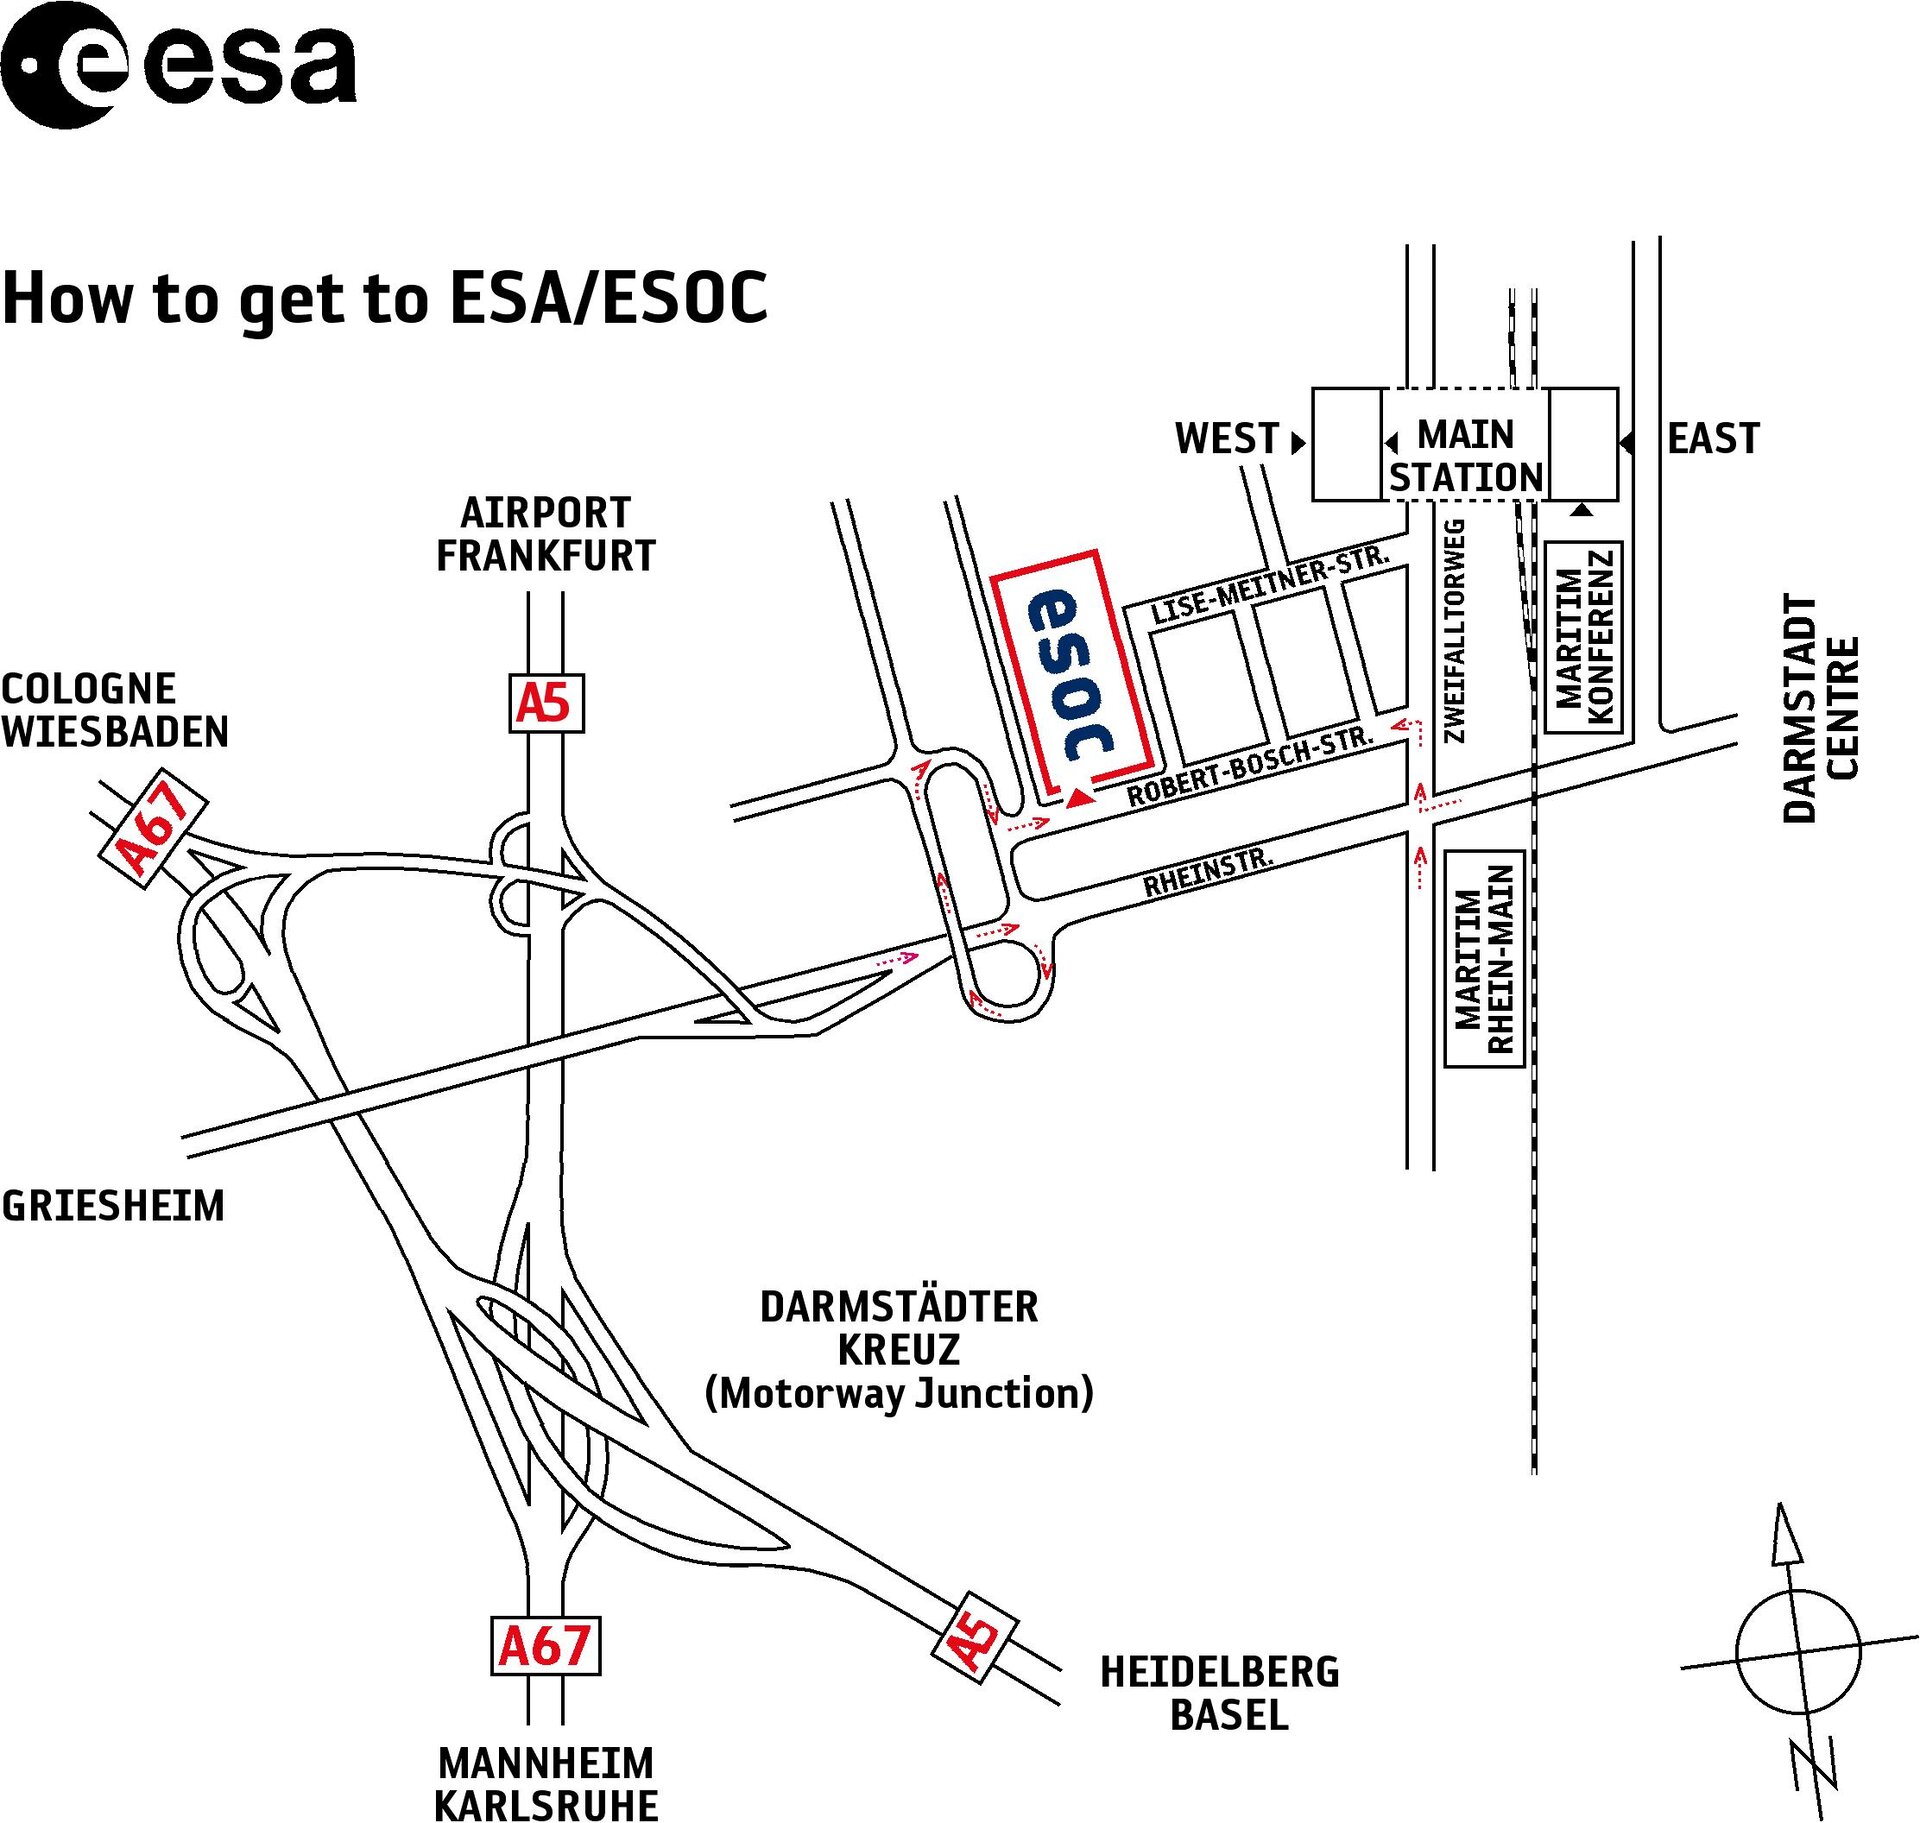 Access ESOC